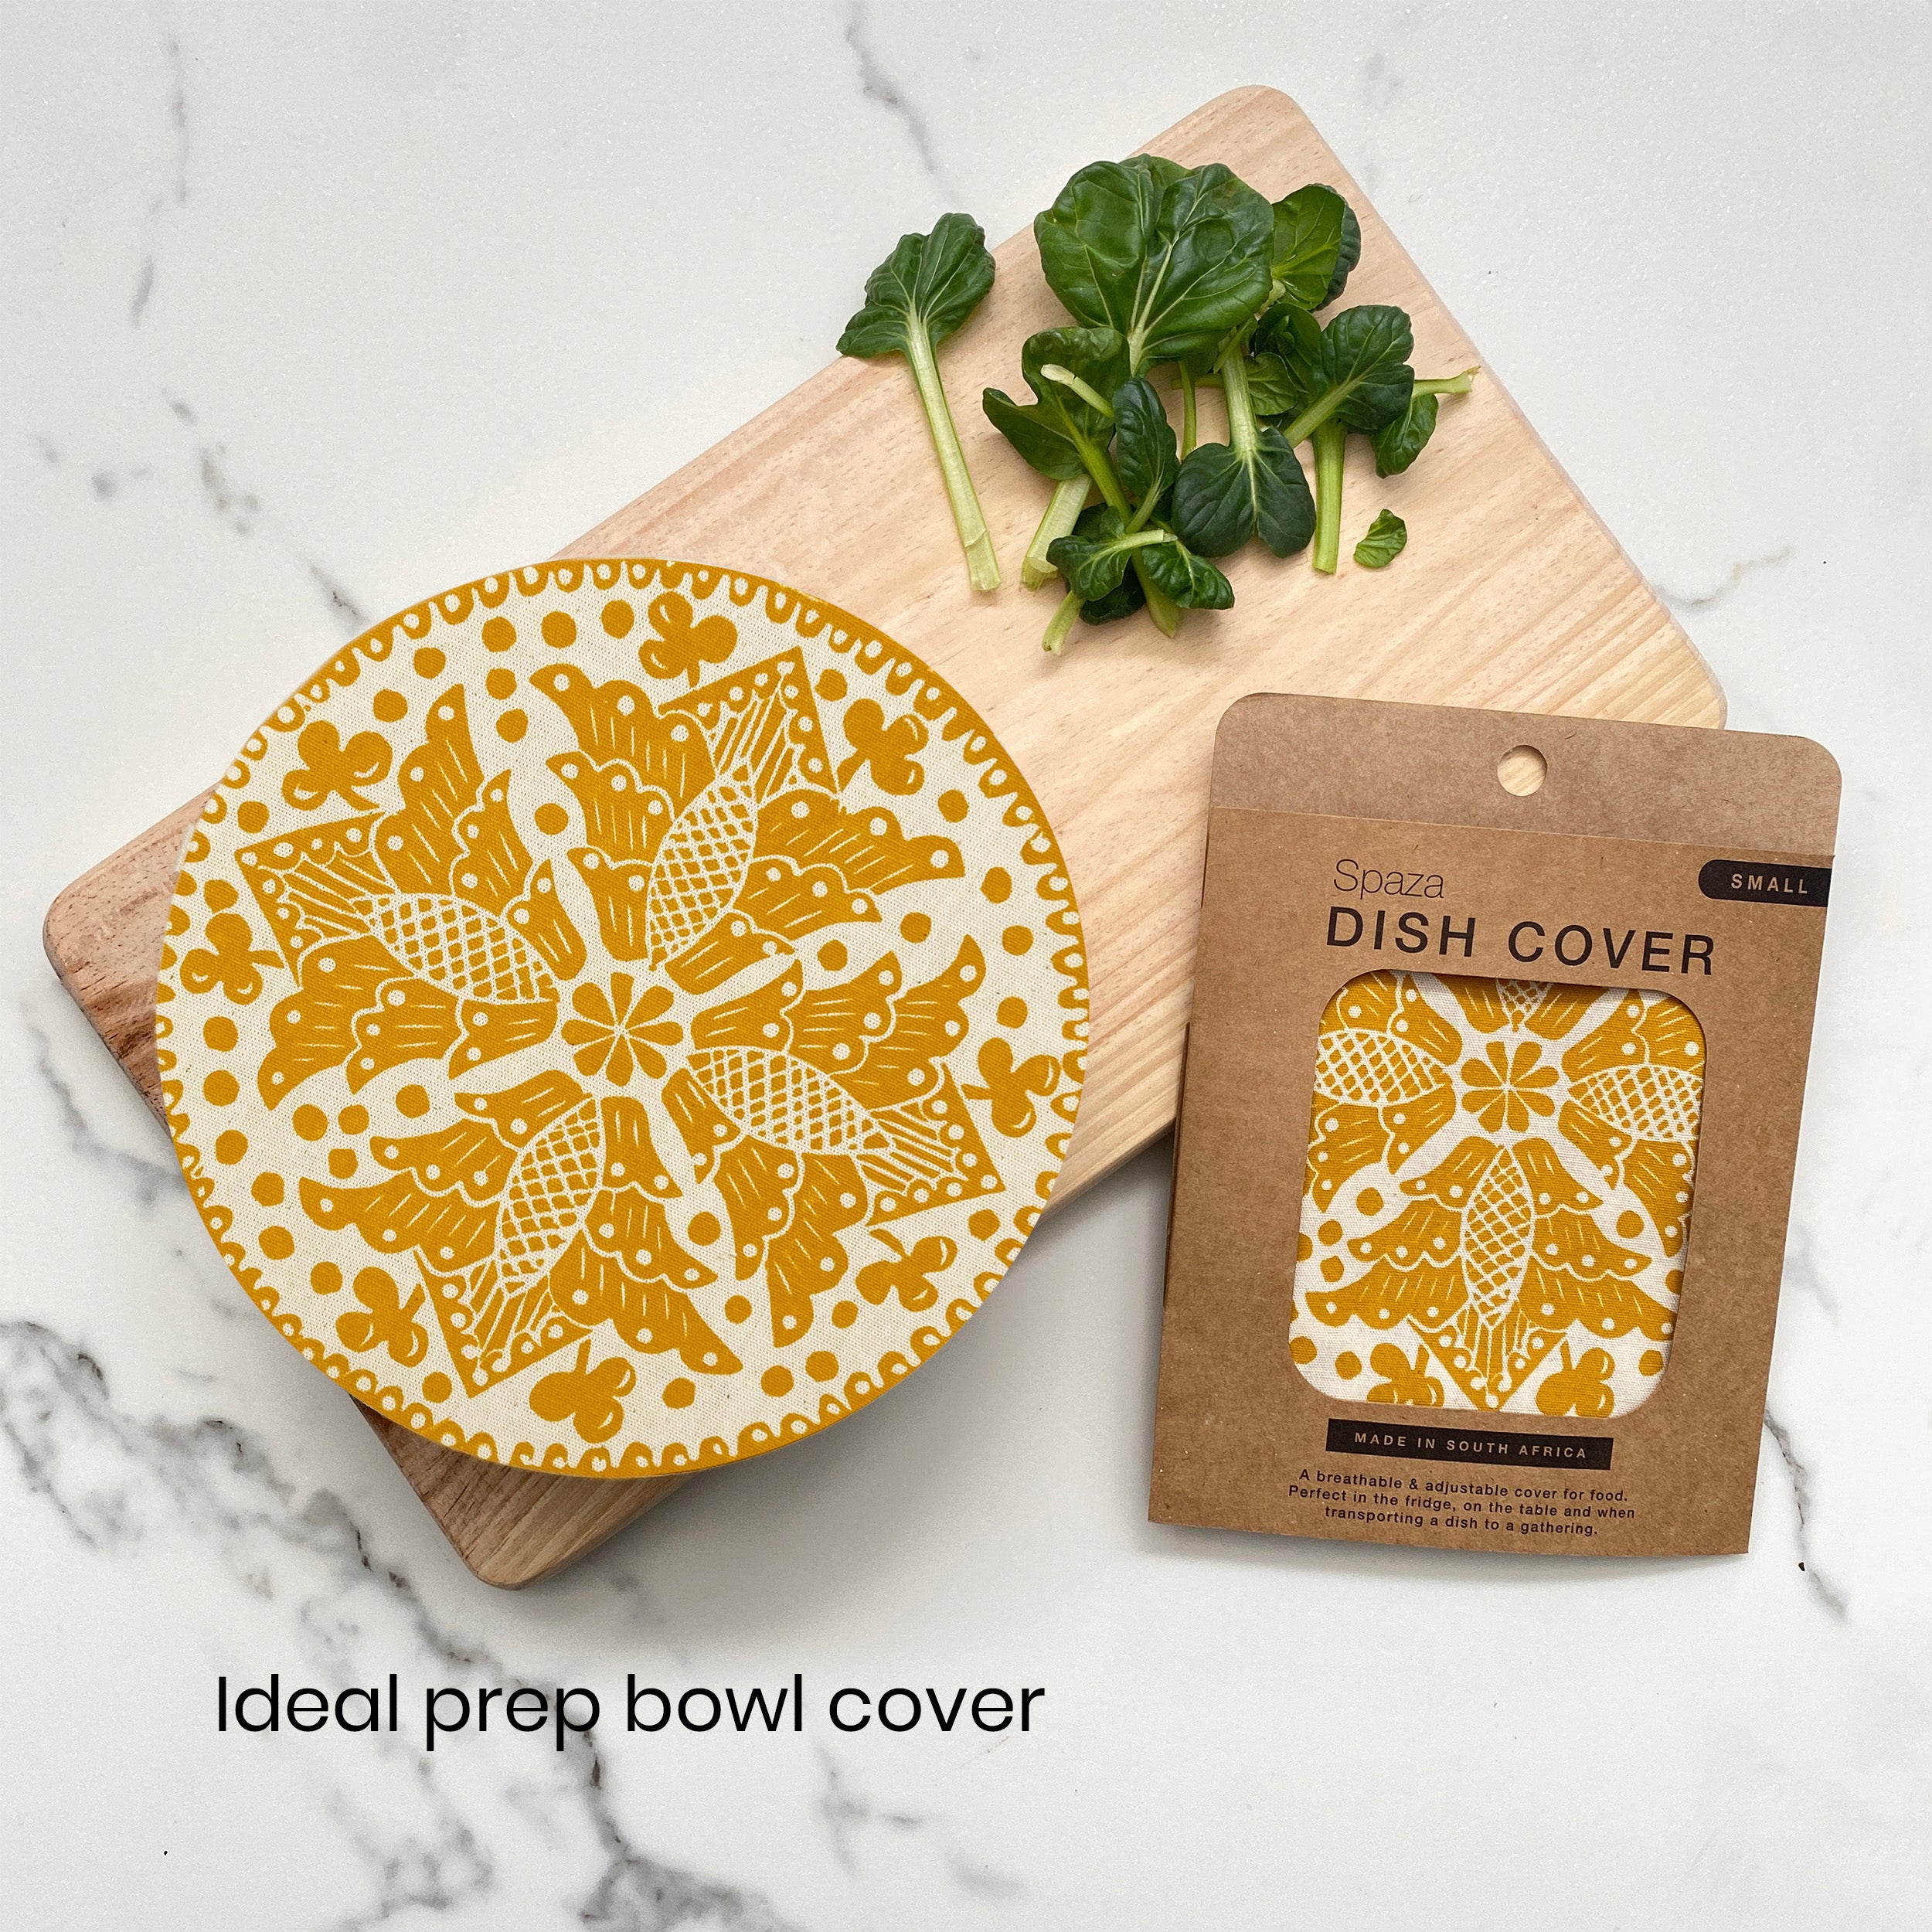 Dish and Bowl Cover Small Madiba Print | handy single portion or leftover